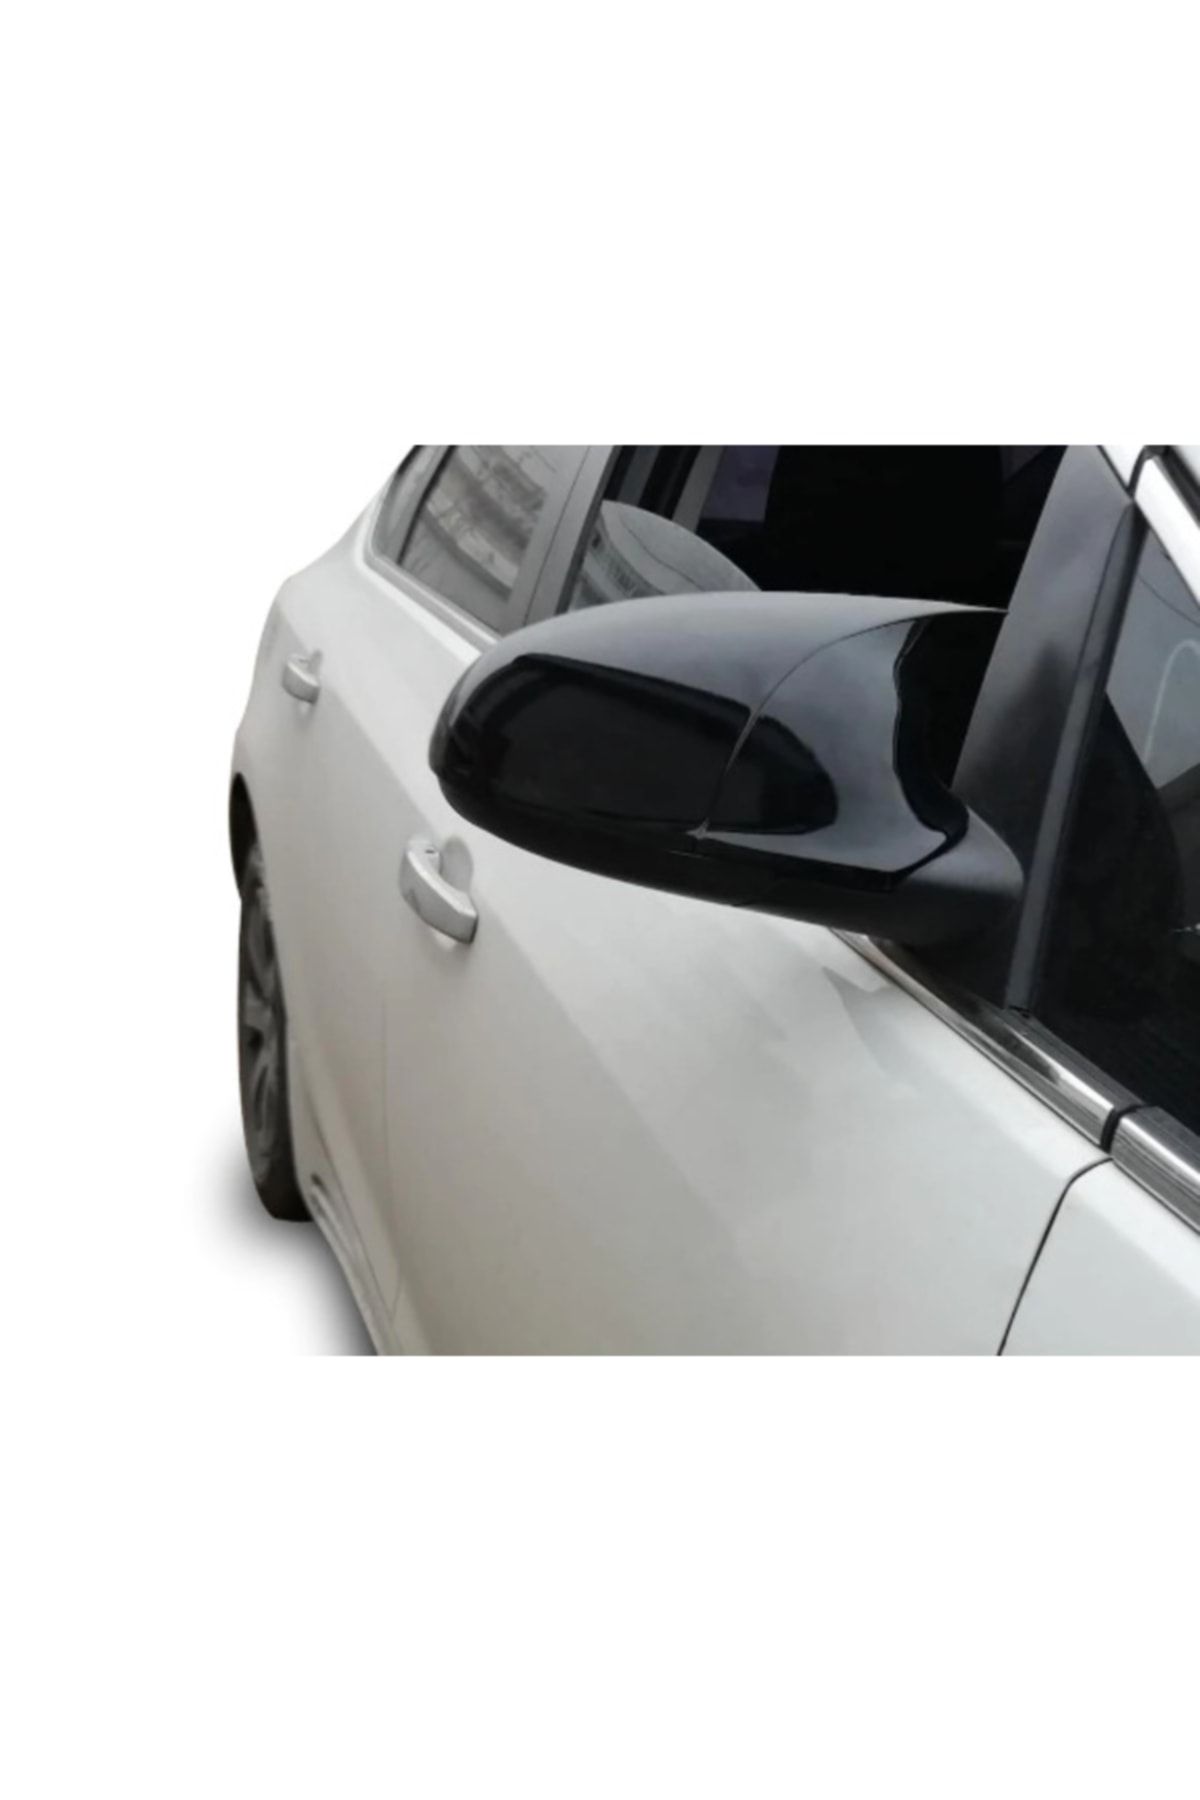 Dynamic Peugeot 208 Yarasa Ayna Kapağı Batman Ayna 2012-2018 Arası